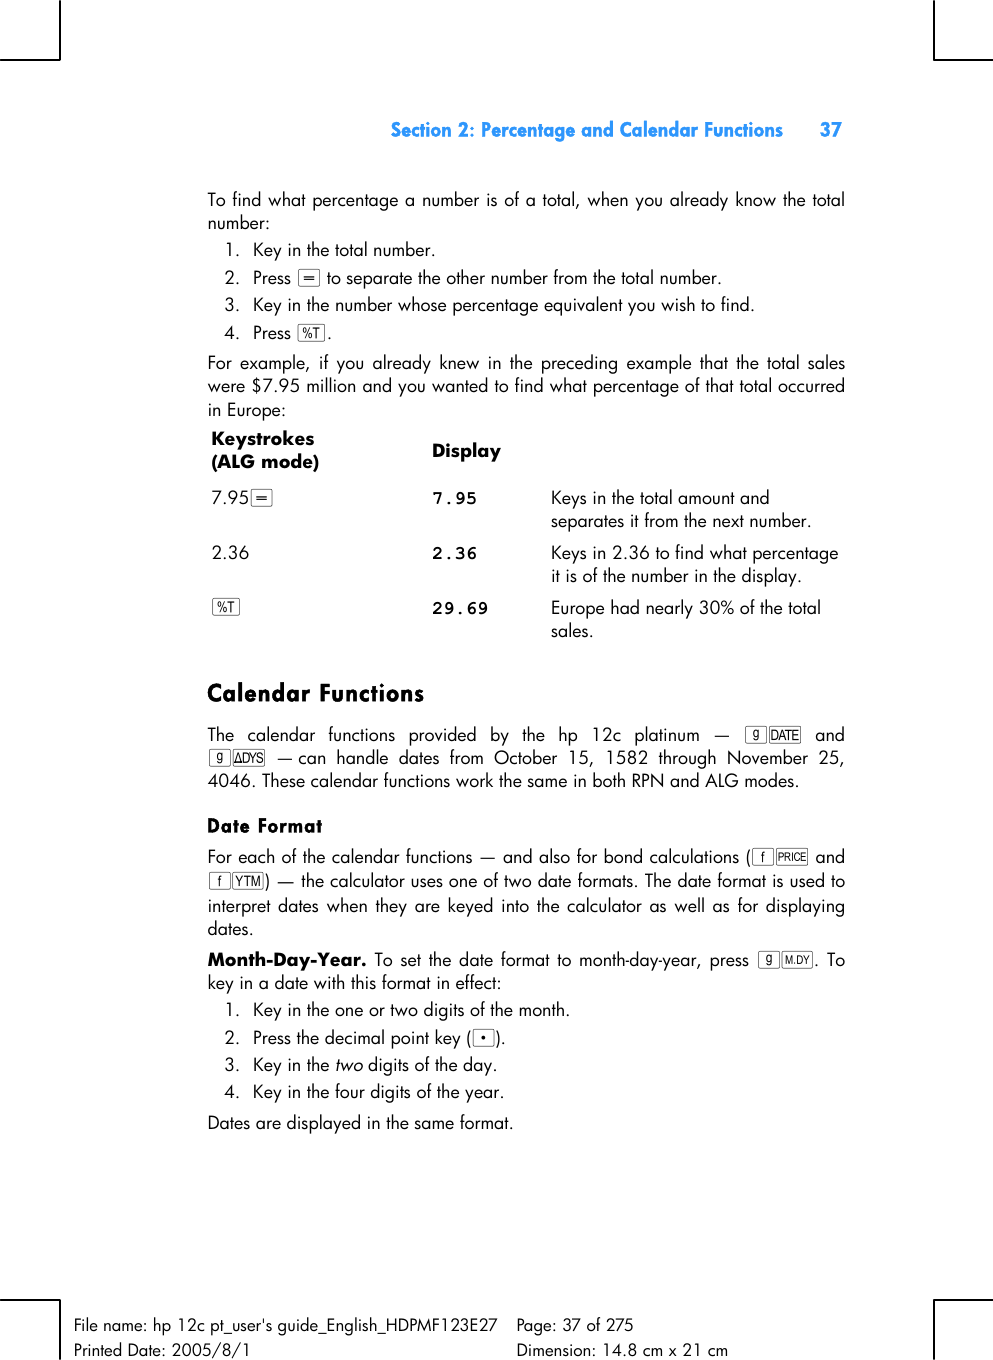 Hp 12c Financial Calculator Users Manual Pt User S Guide English Hdpmf123e27